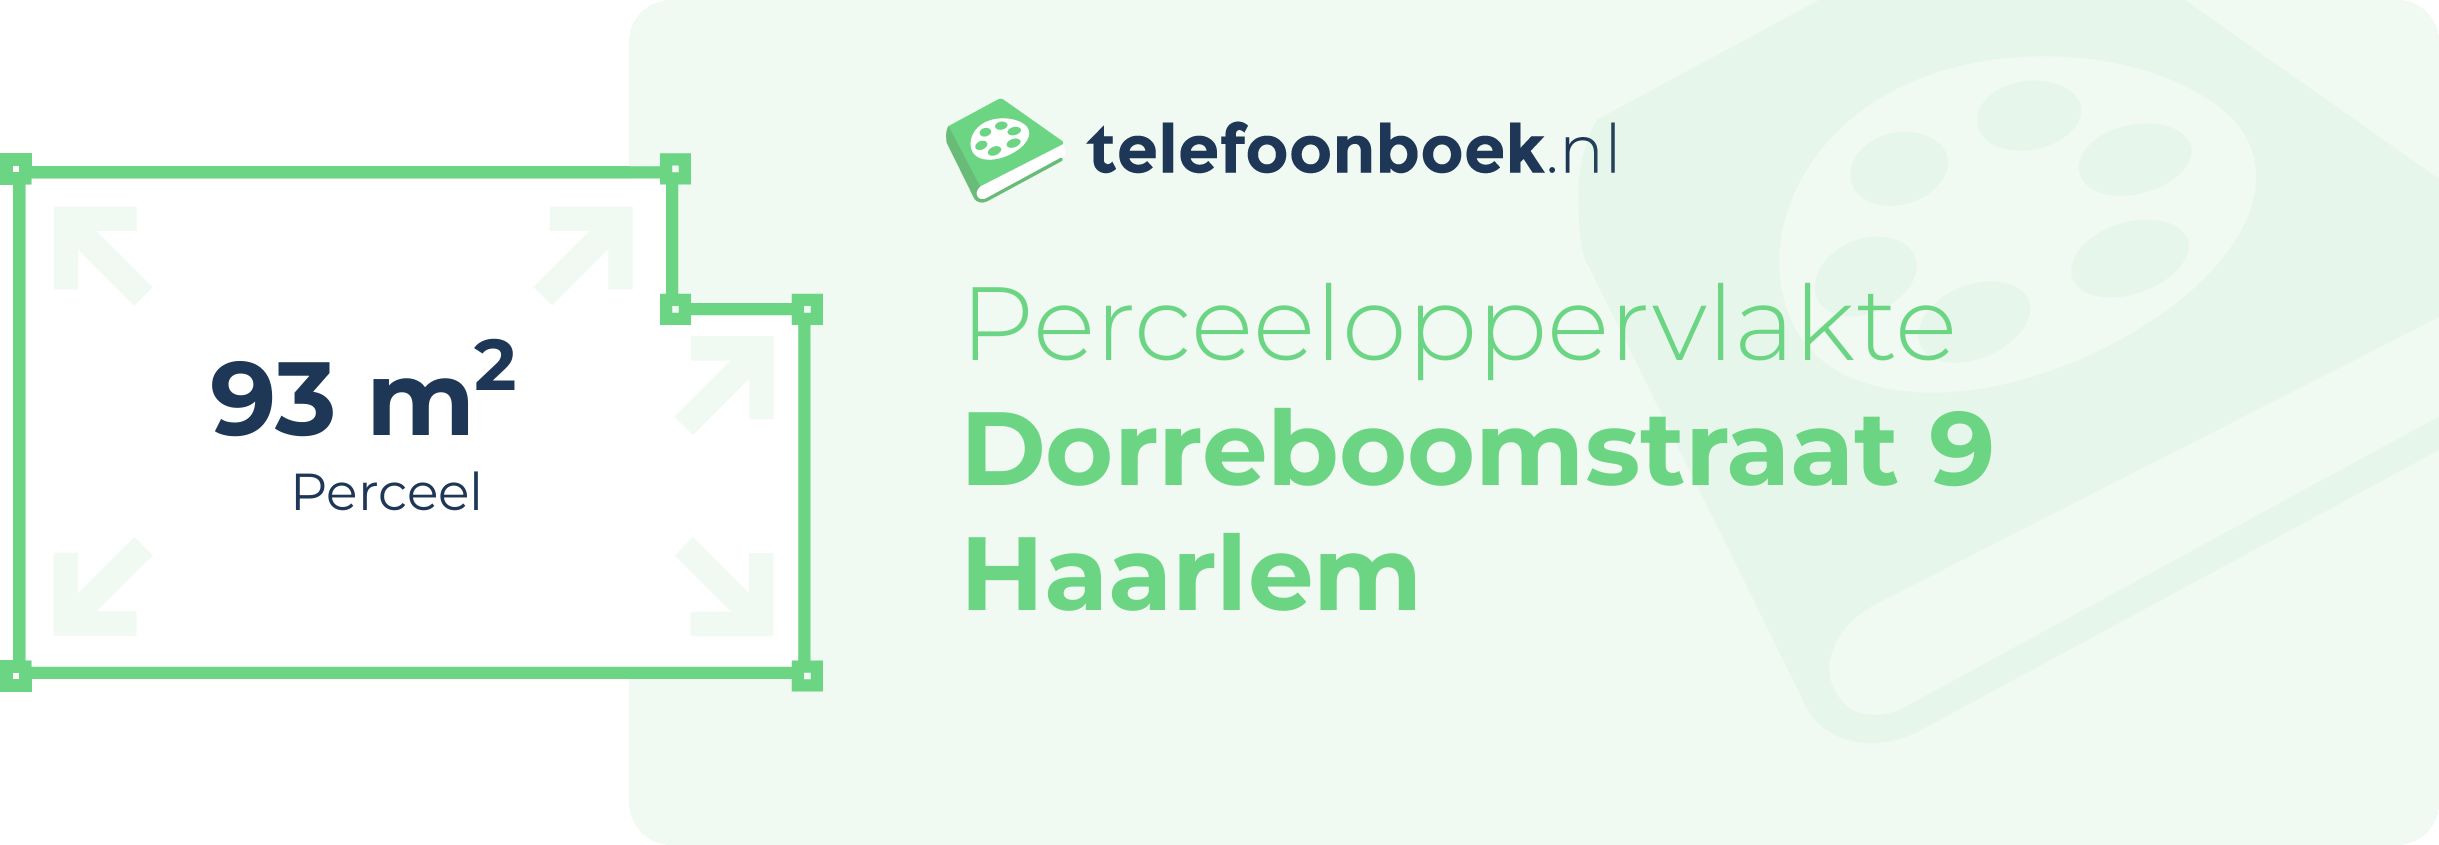 Perceeloppervlakte Dorreboomstraat 9 Haarlem